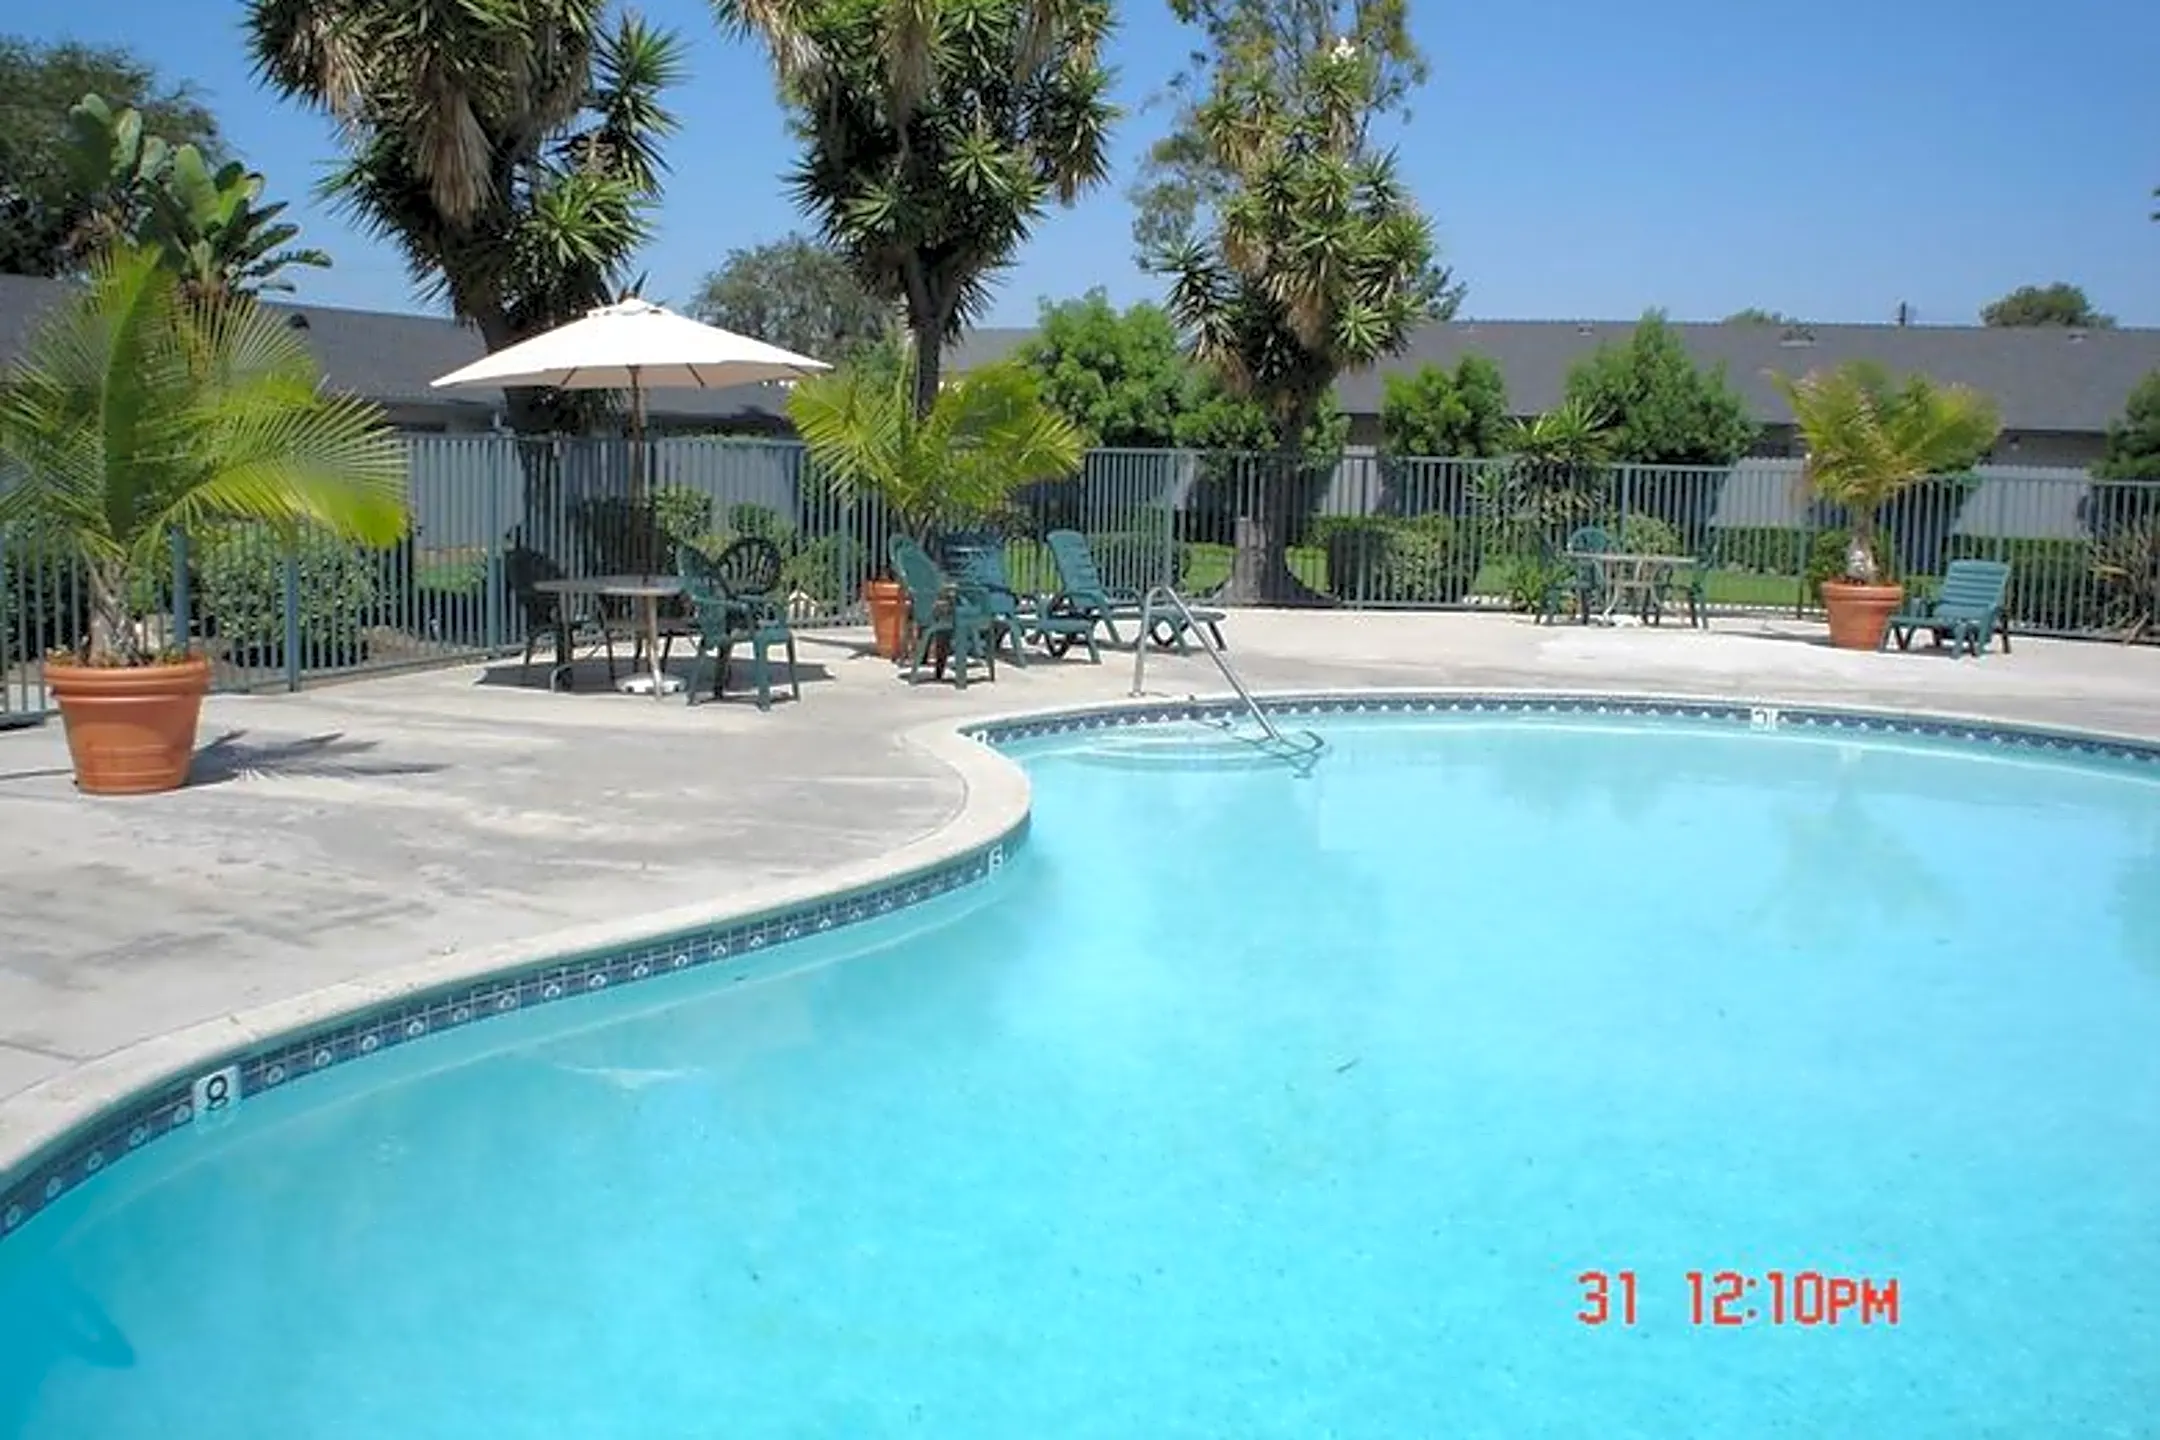 Pool - Arbor Glen Apartments - Garden Grove, CA